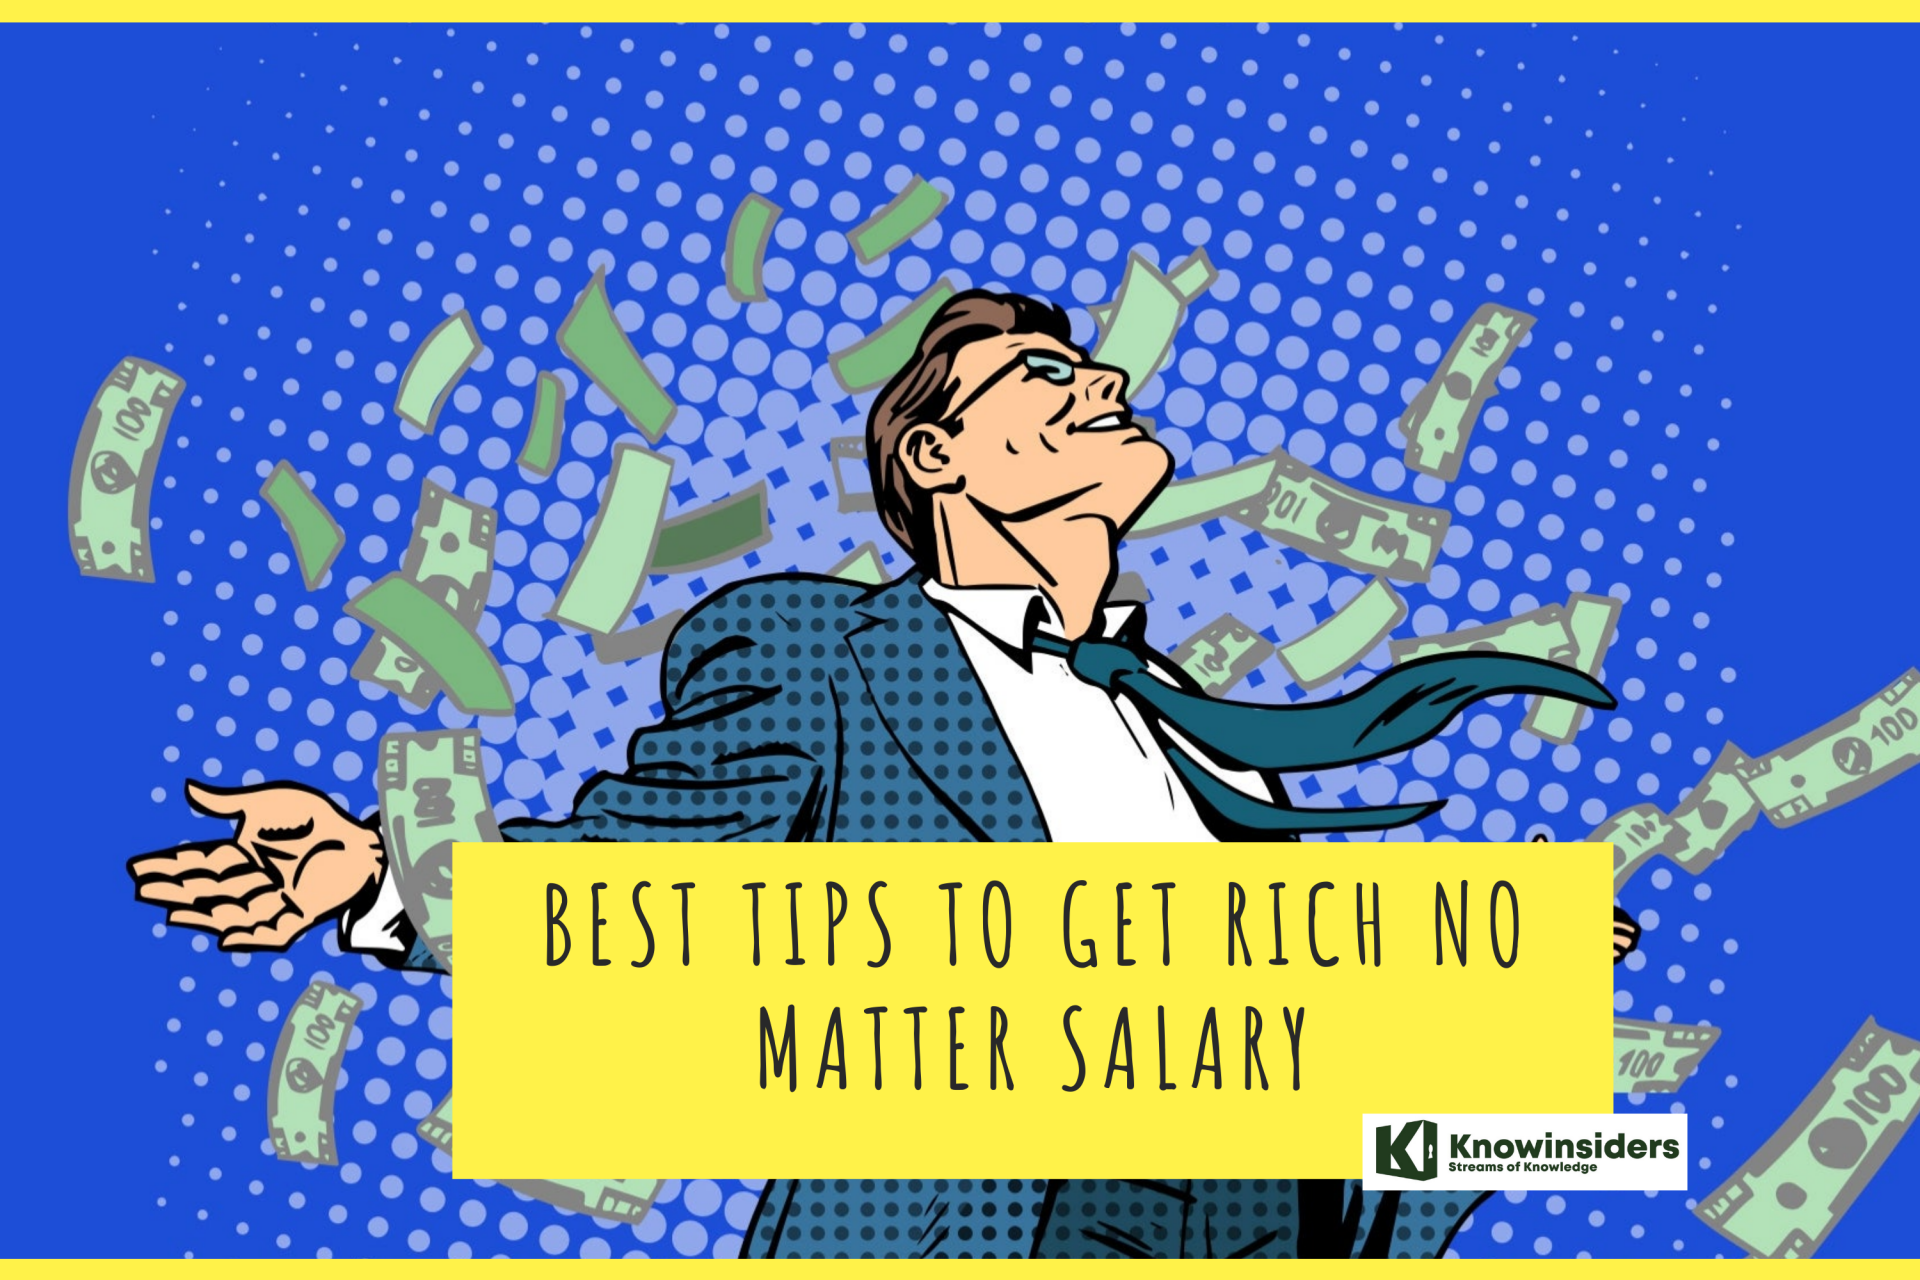 Best Tips to Get Rich No Matter Salary